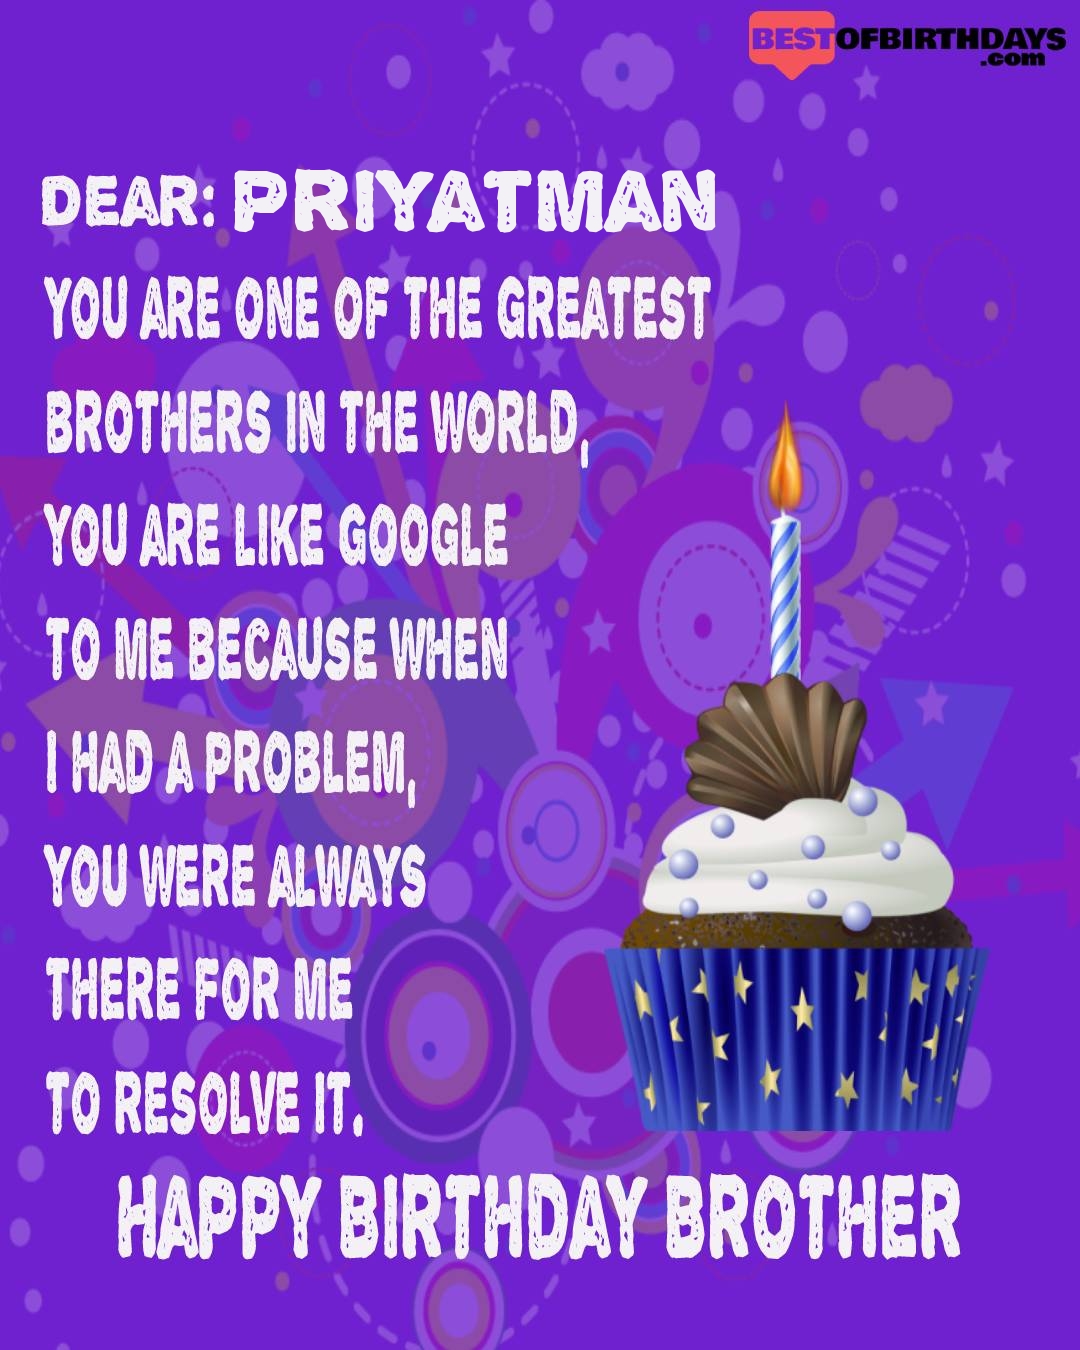 Happy birthday priyatman bhai brother bro